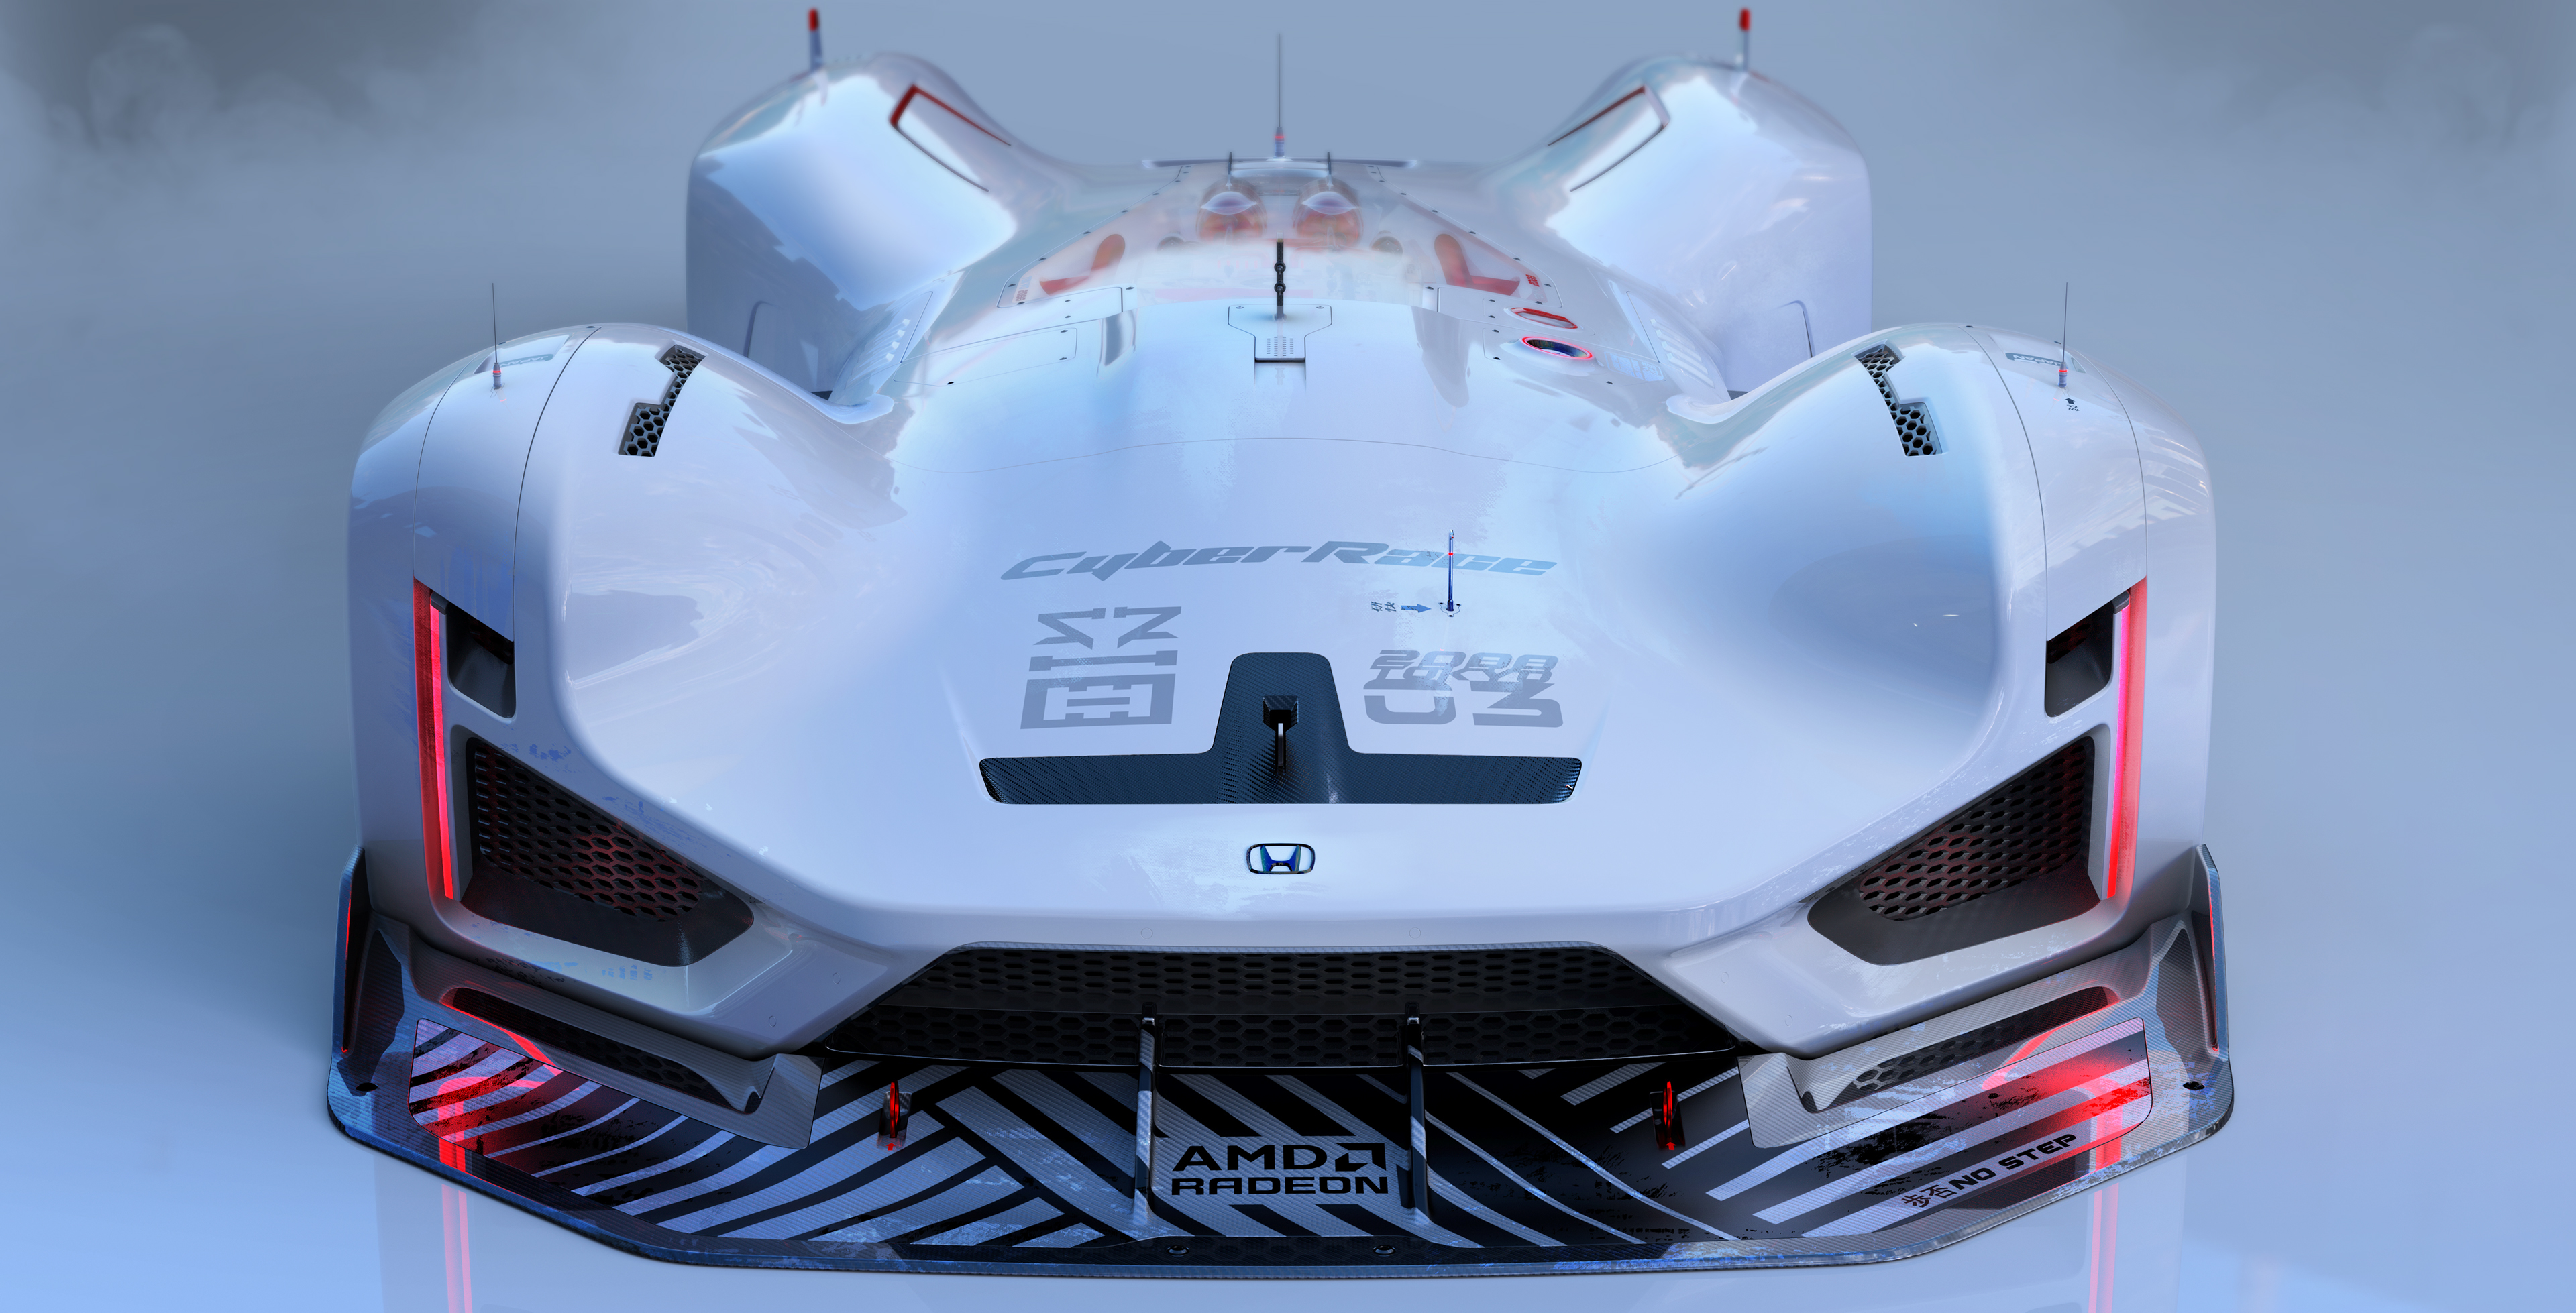 Honda Race Cars CGi Behance Car Frontal View White Cars Simple Background AMD Radeon Minimalism Digi 3840x1958